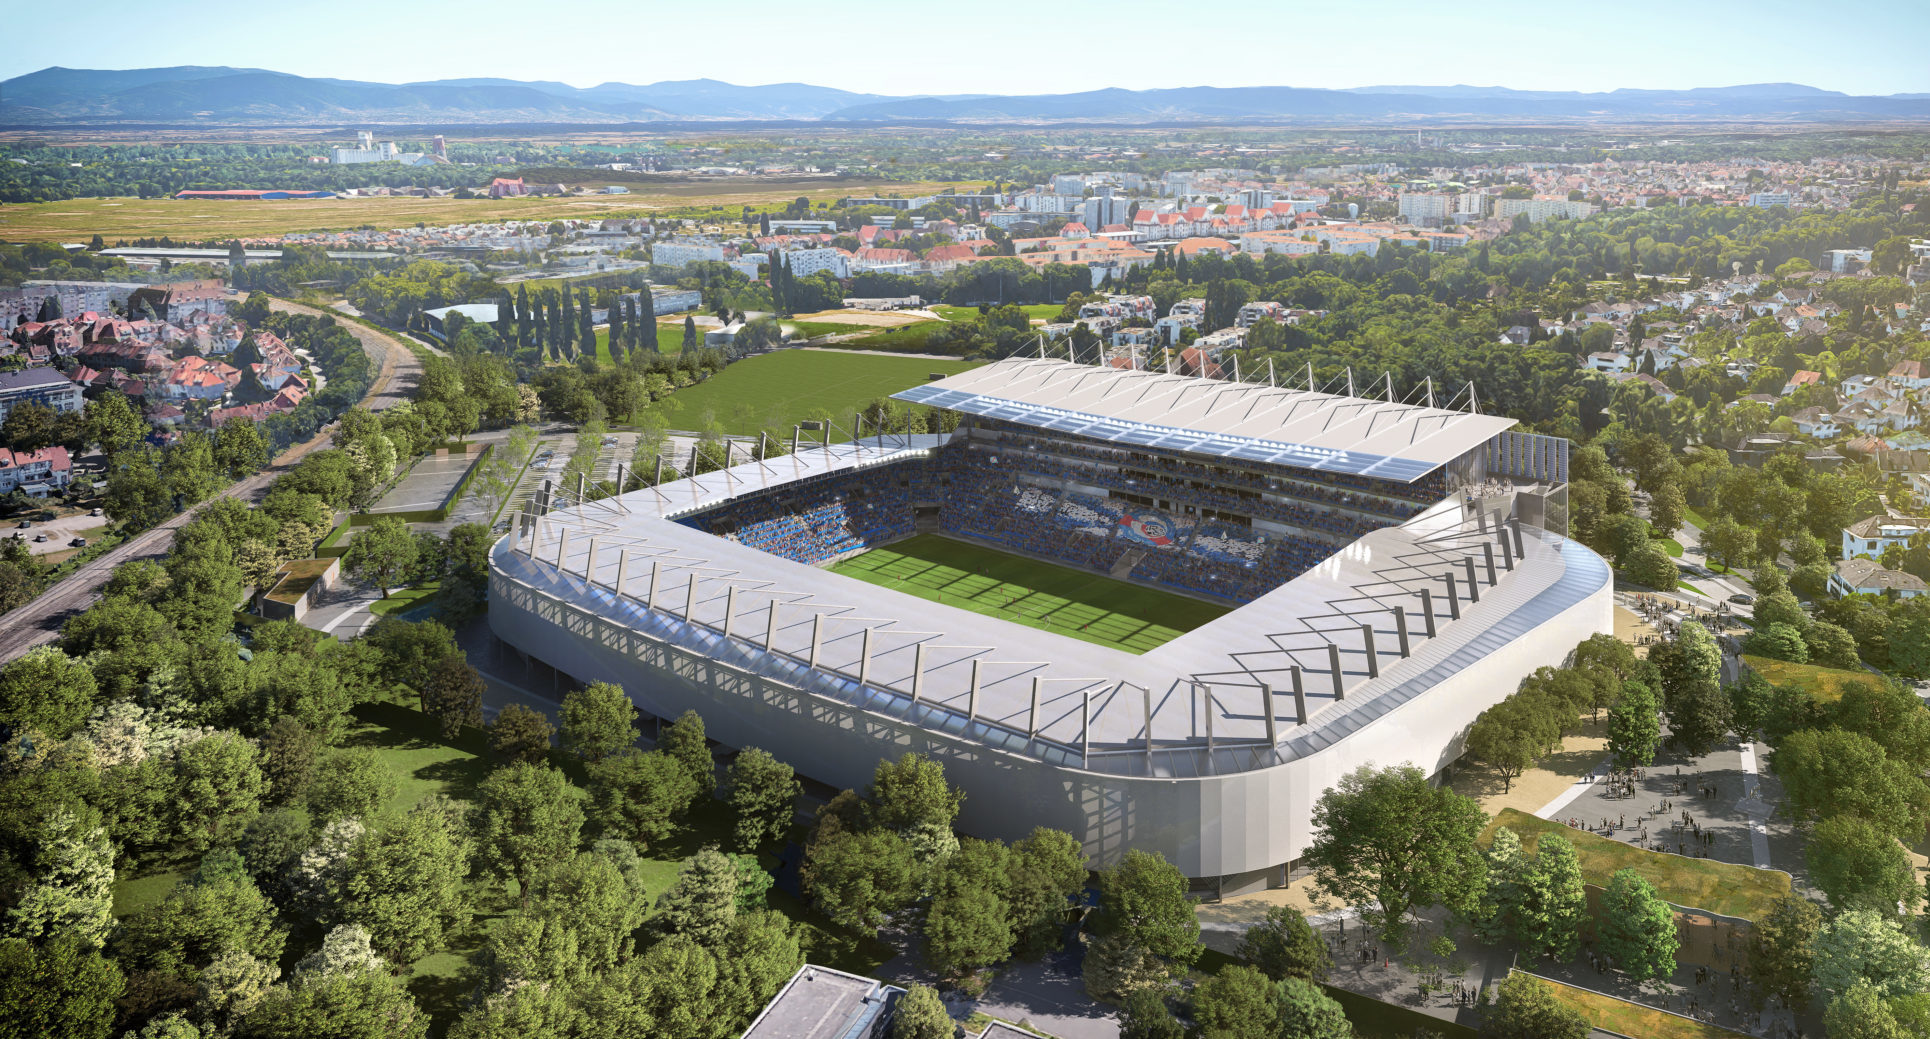 Strasbourg S Stade De La Meinau Renovation Project Announced Populous